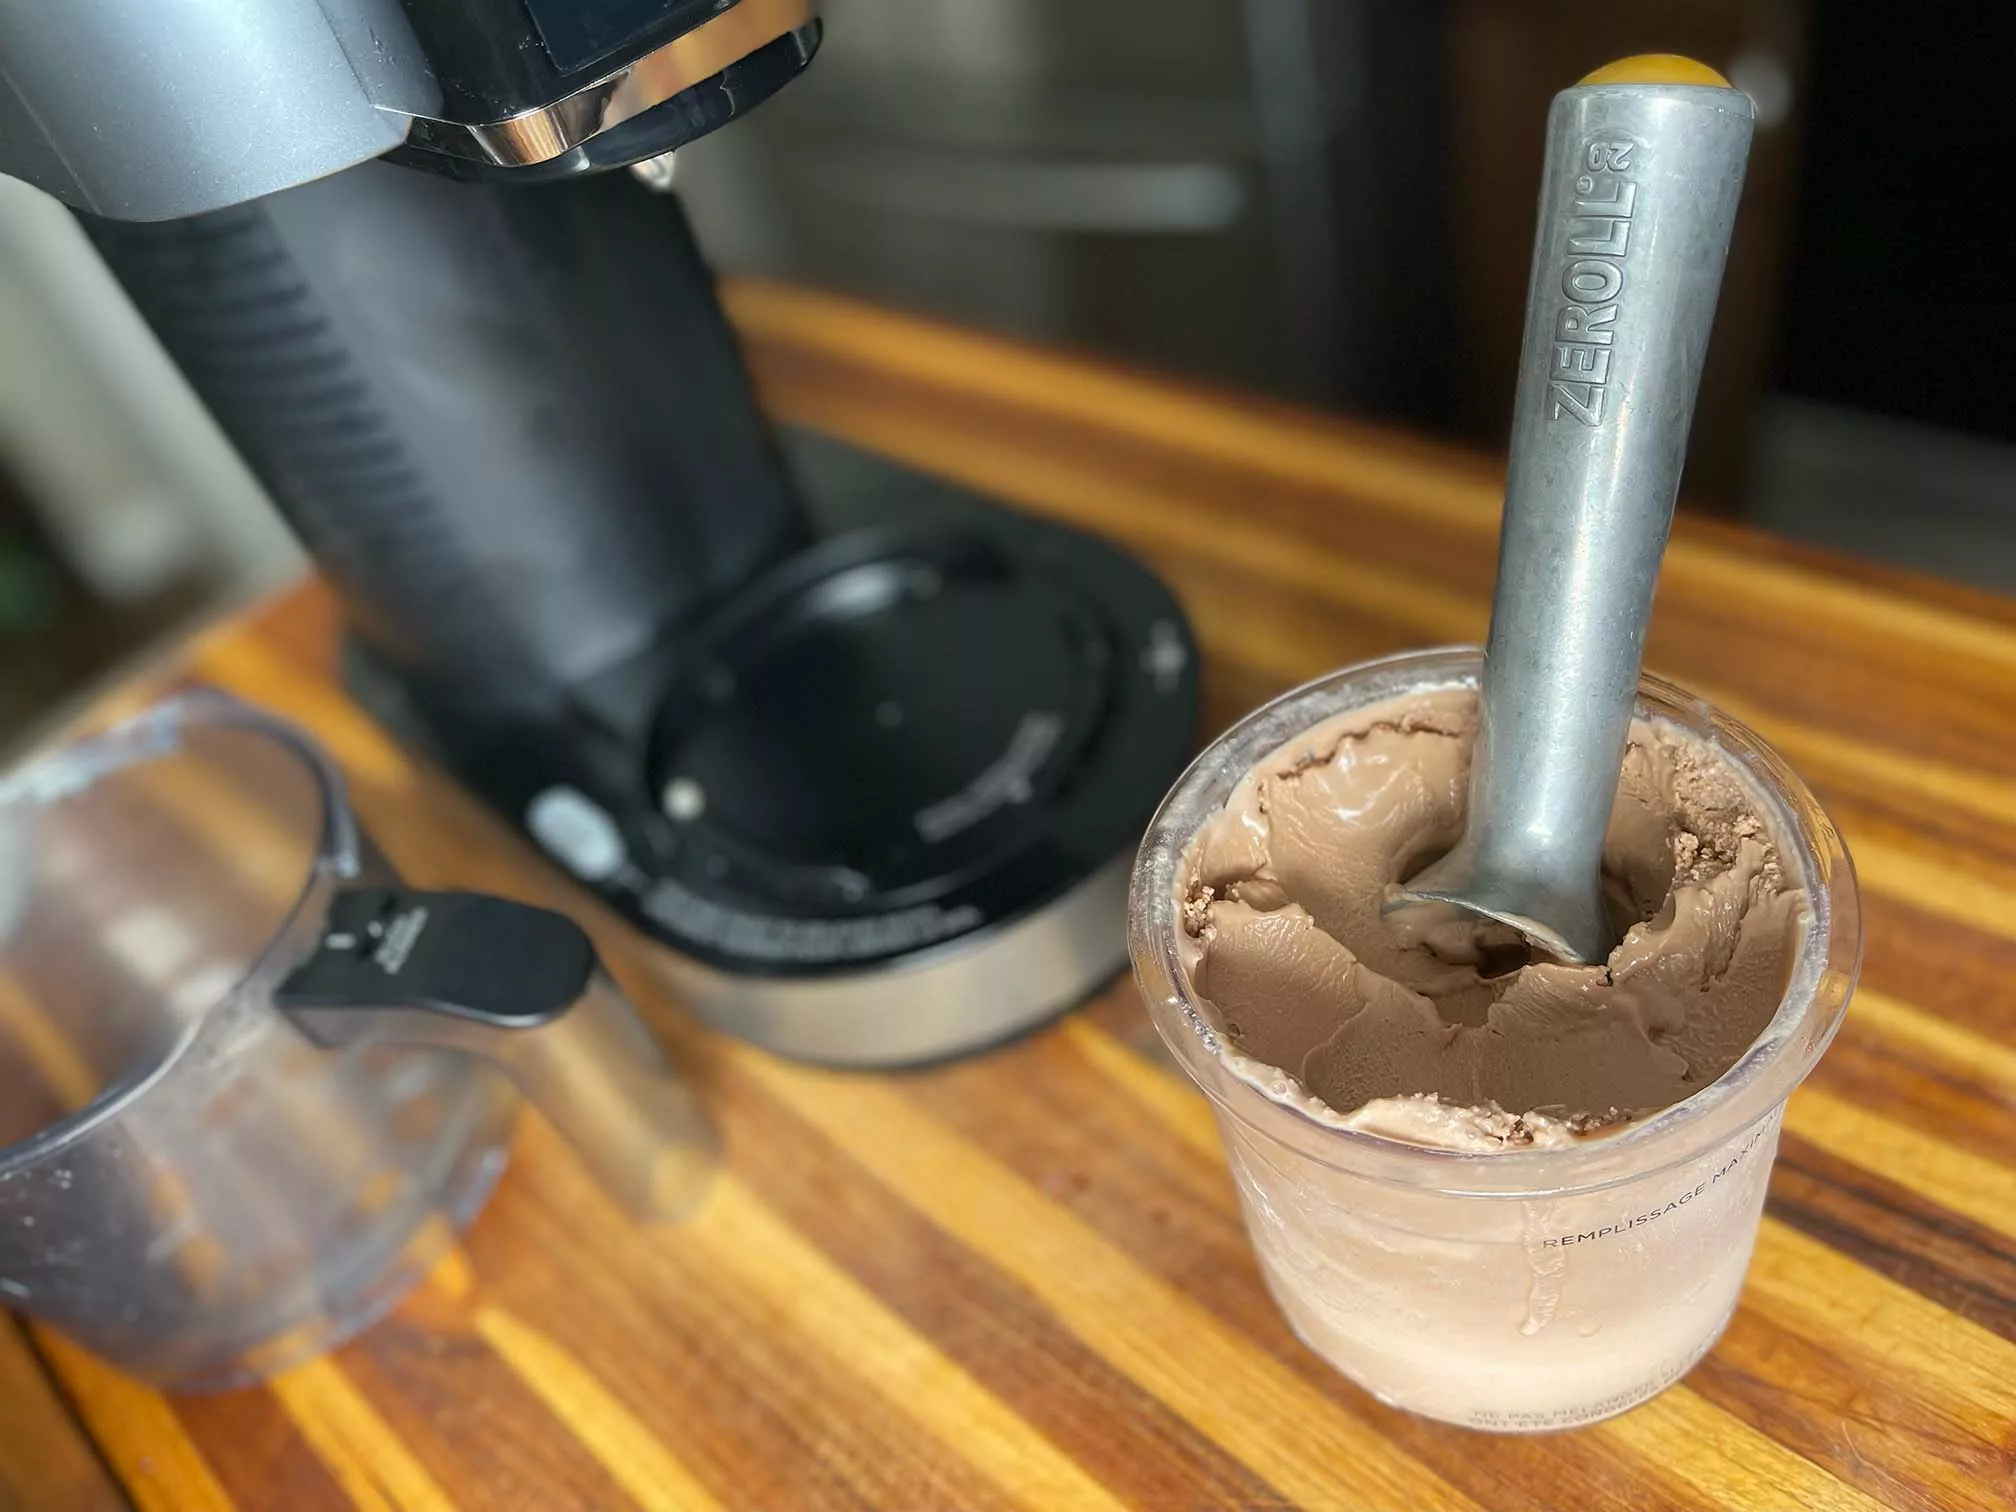 https://www.sizzleandsear.com/wp-content/uploads/2021/12/ninja-creami-review-chocolate-ice-cream-with-scoop-jpg.webp